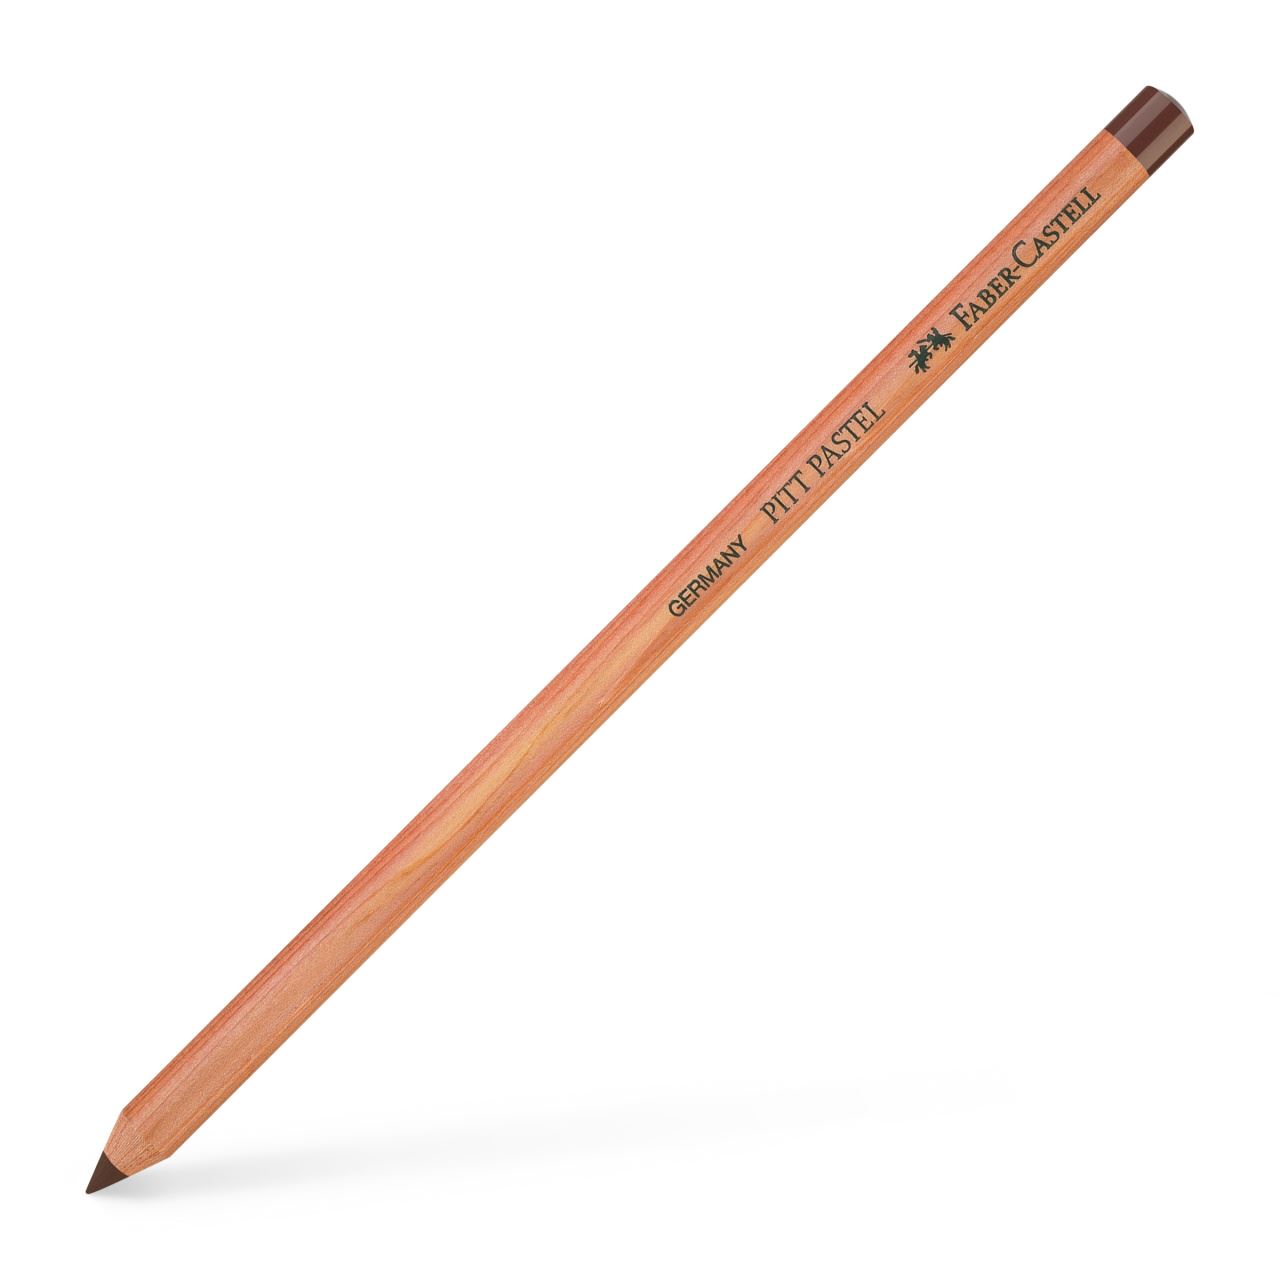 Faber-Castell - Pitt Pastel pencil, Van Dyck brown